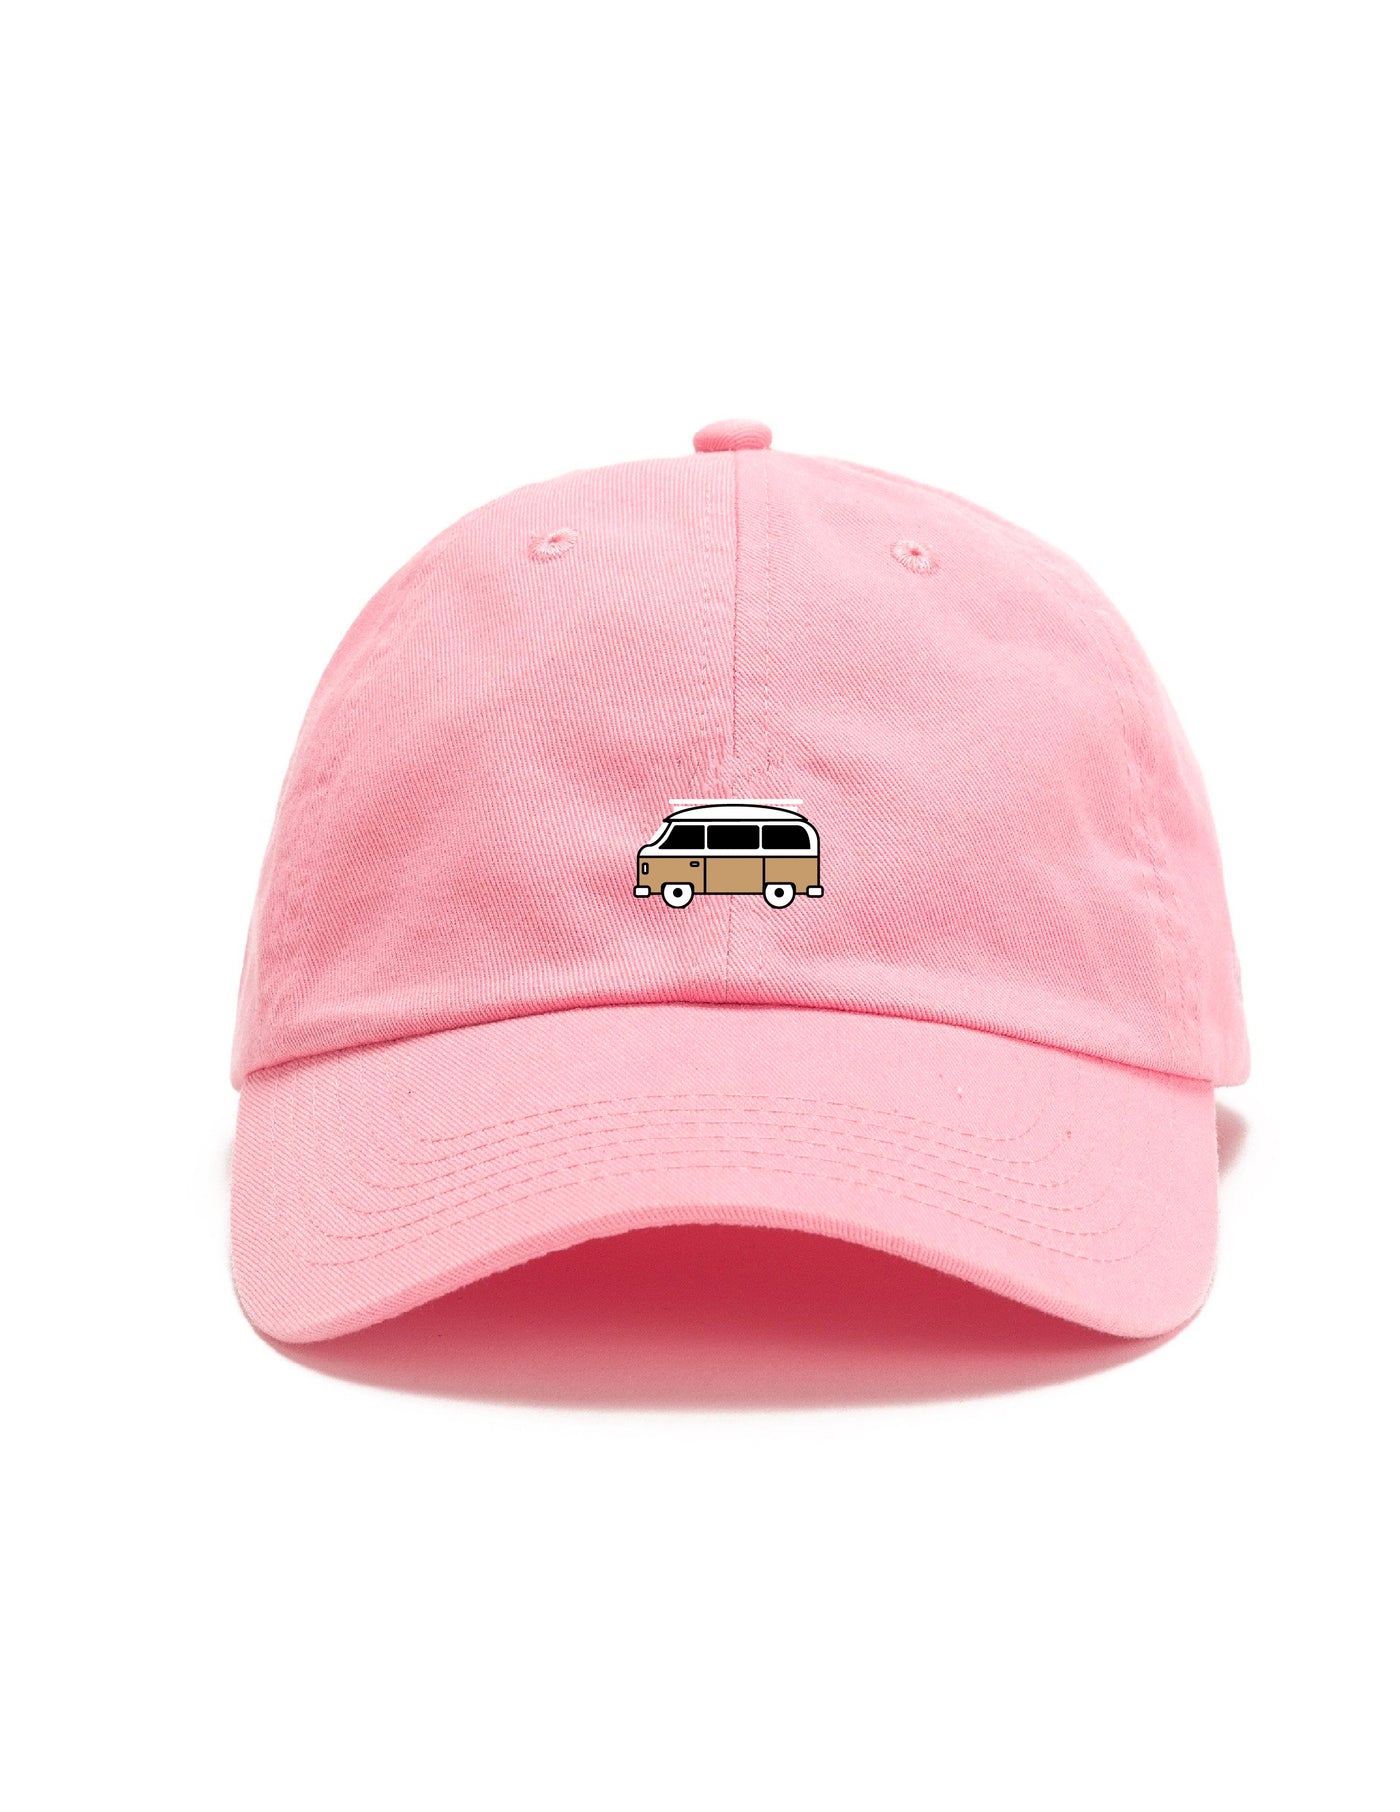 Road Trip Hat - Pink